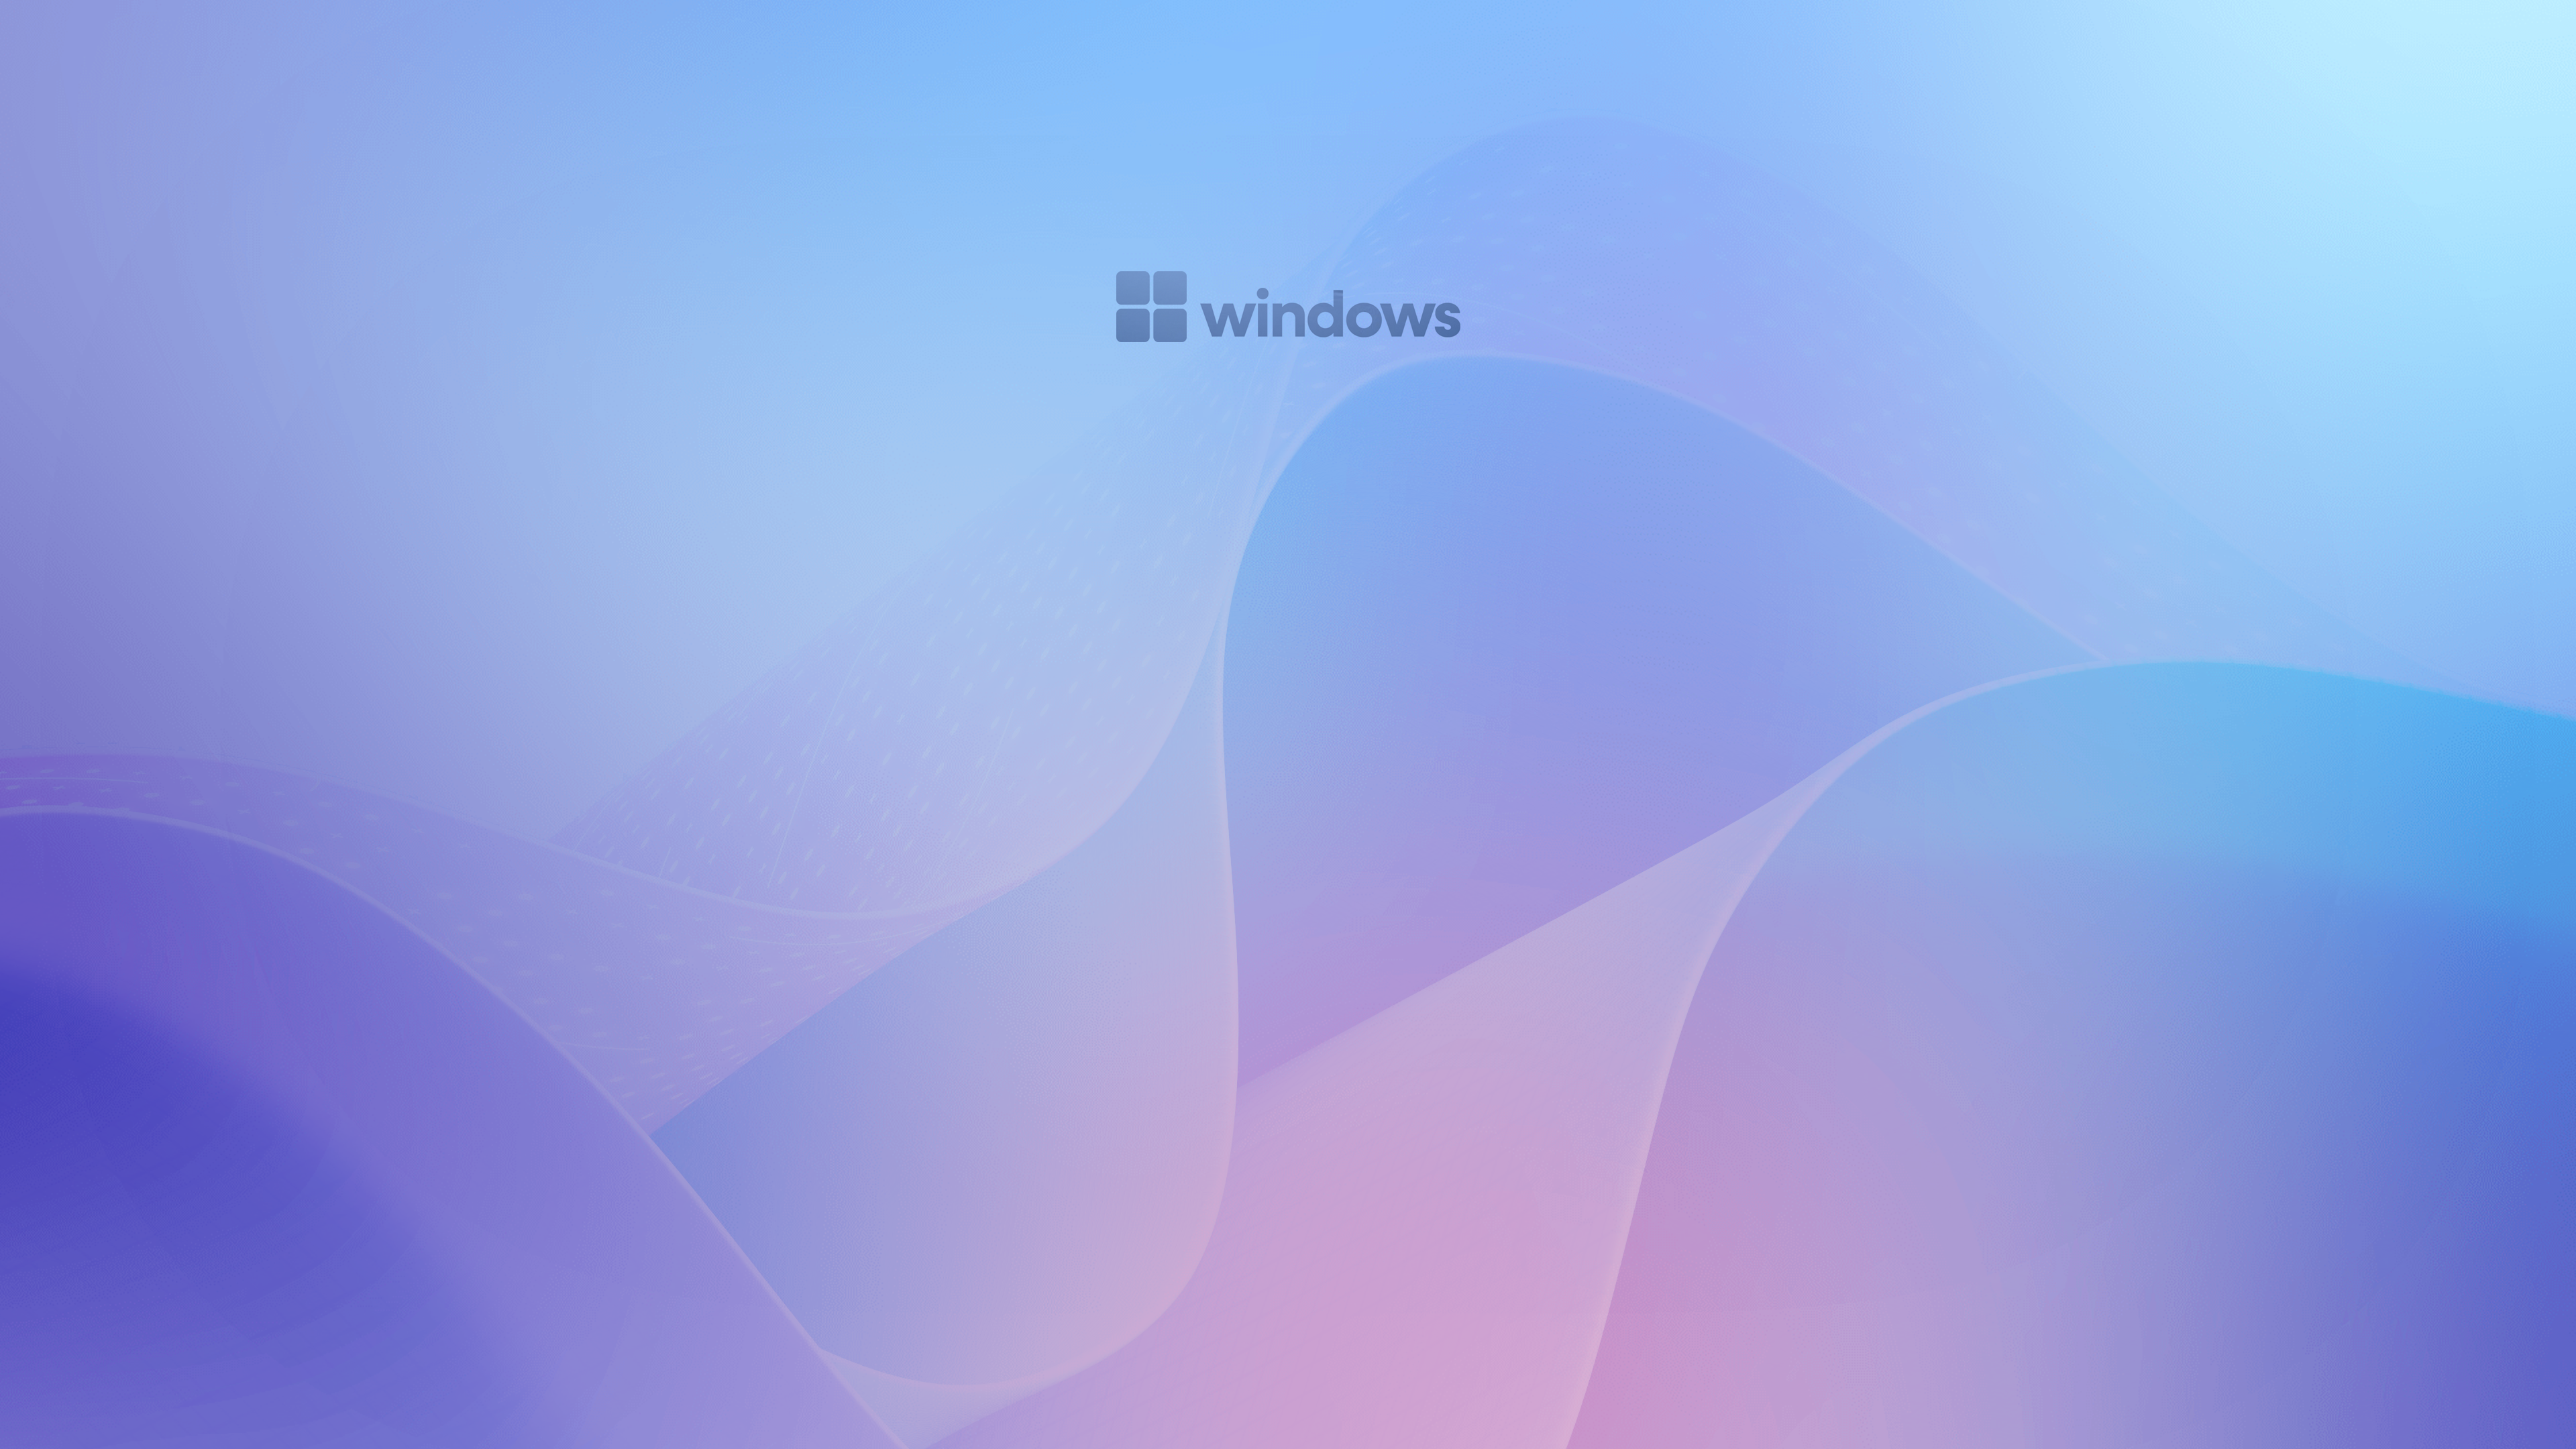 100+] Windows 11 4k Wallpapers